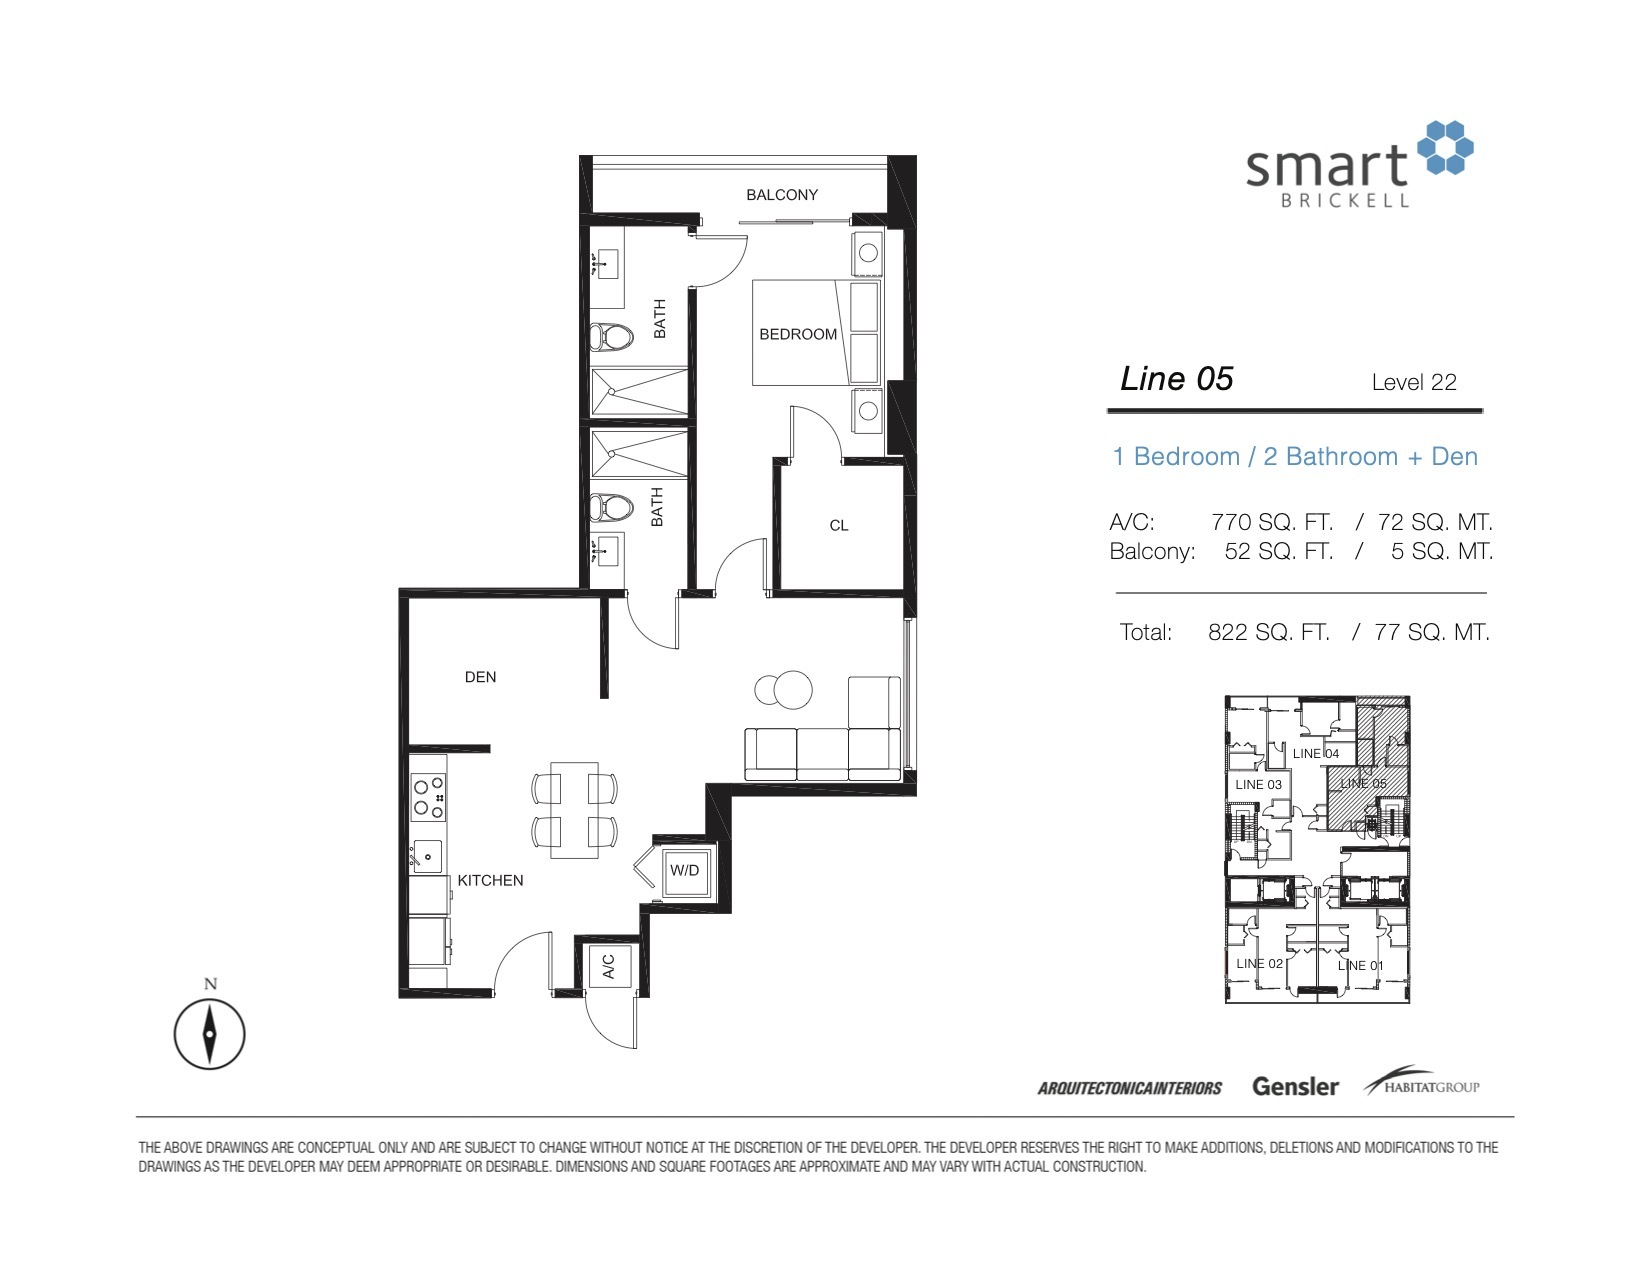 Floor Plan for Smart Brickell Floorplans, Line 05 Level 22